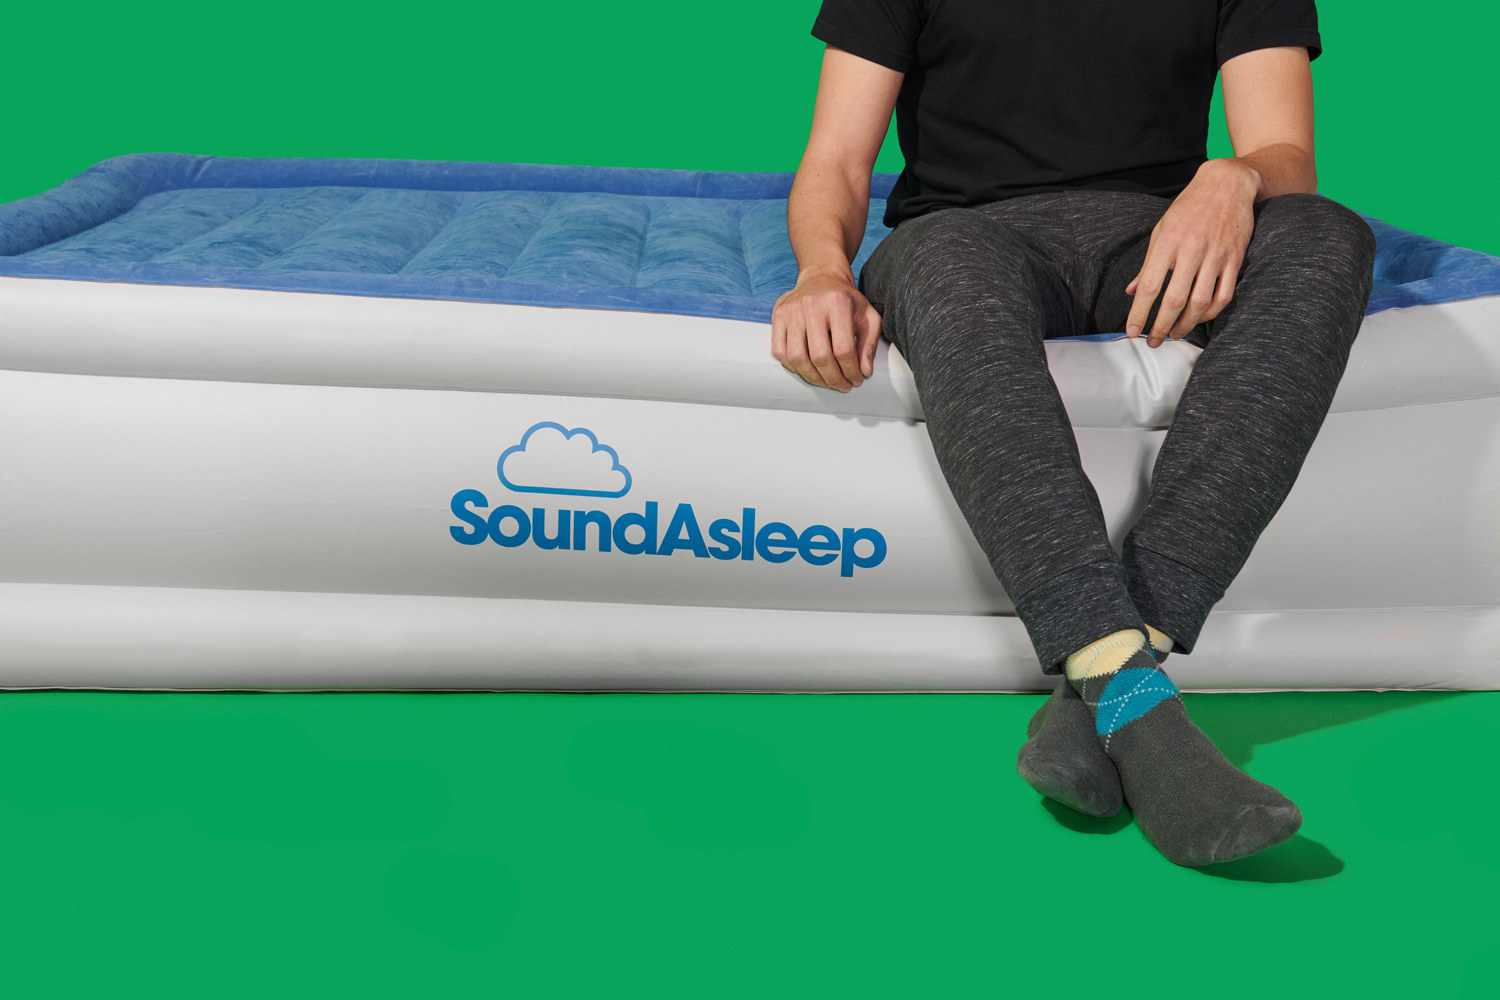 sound asleep air mattress repair kit